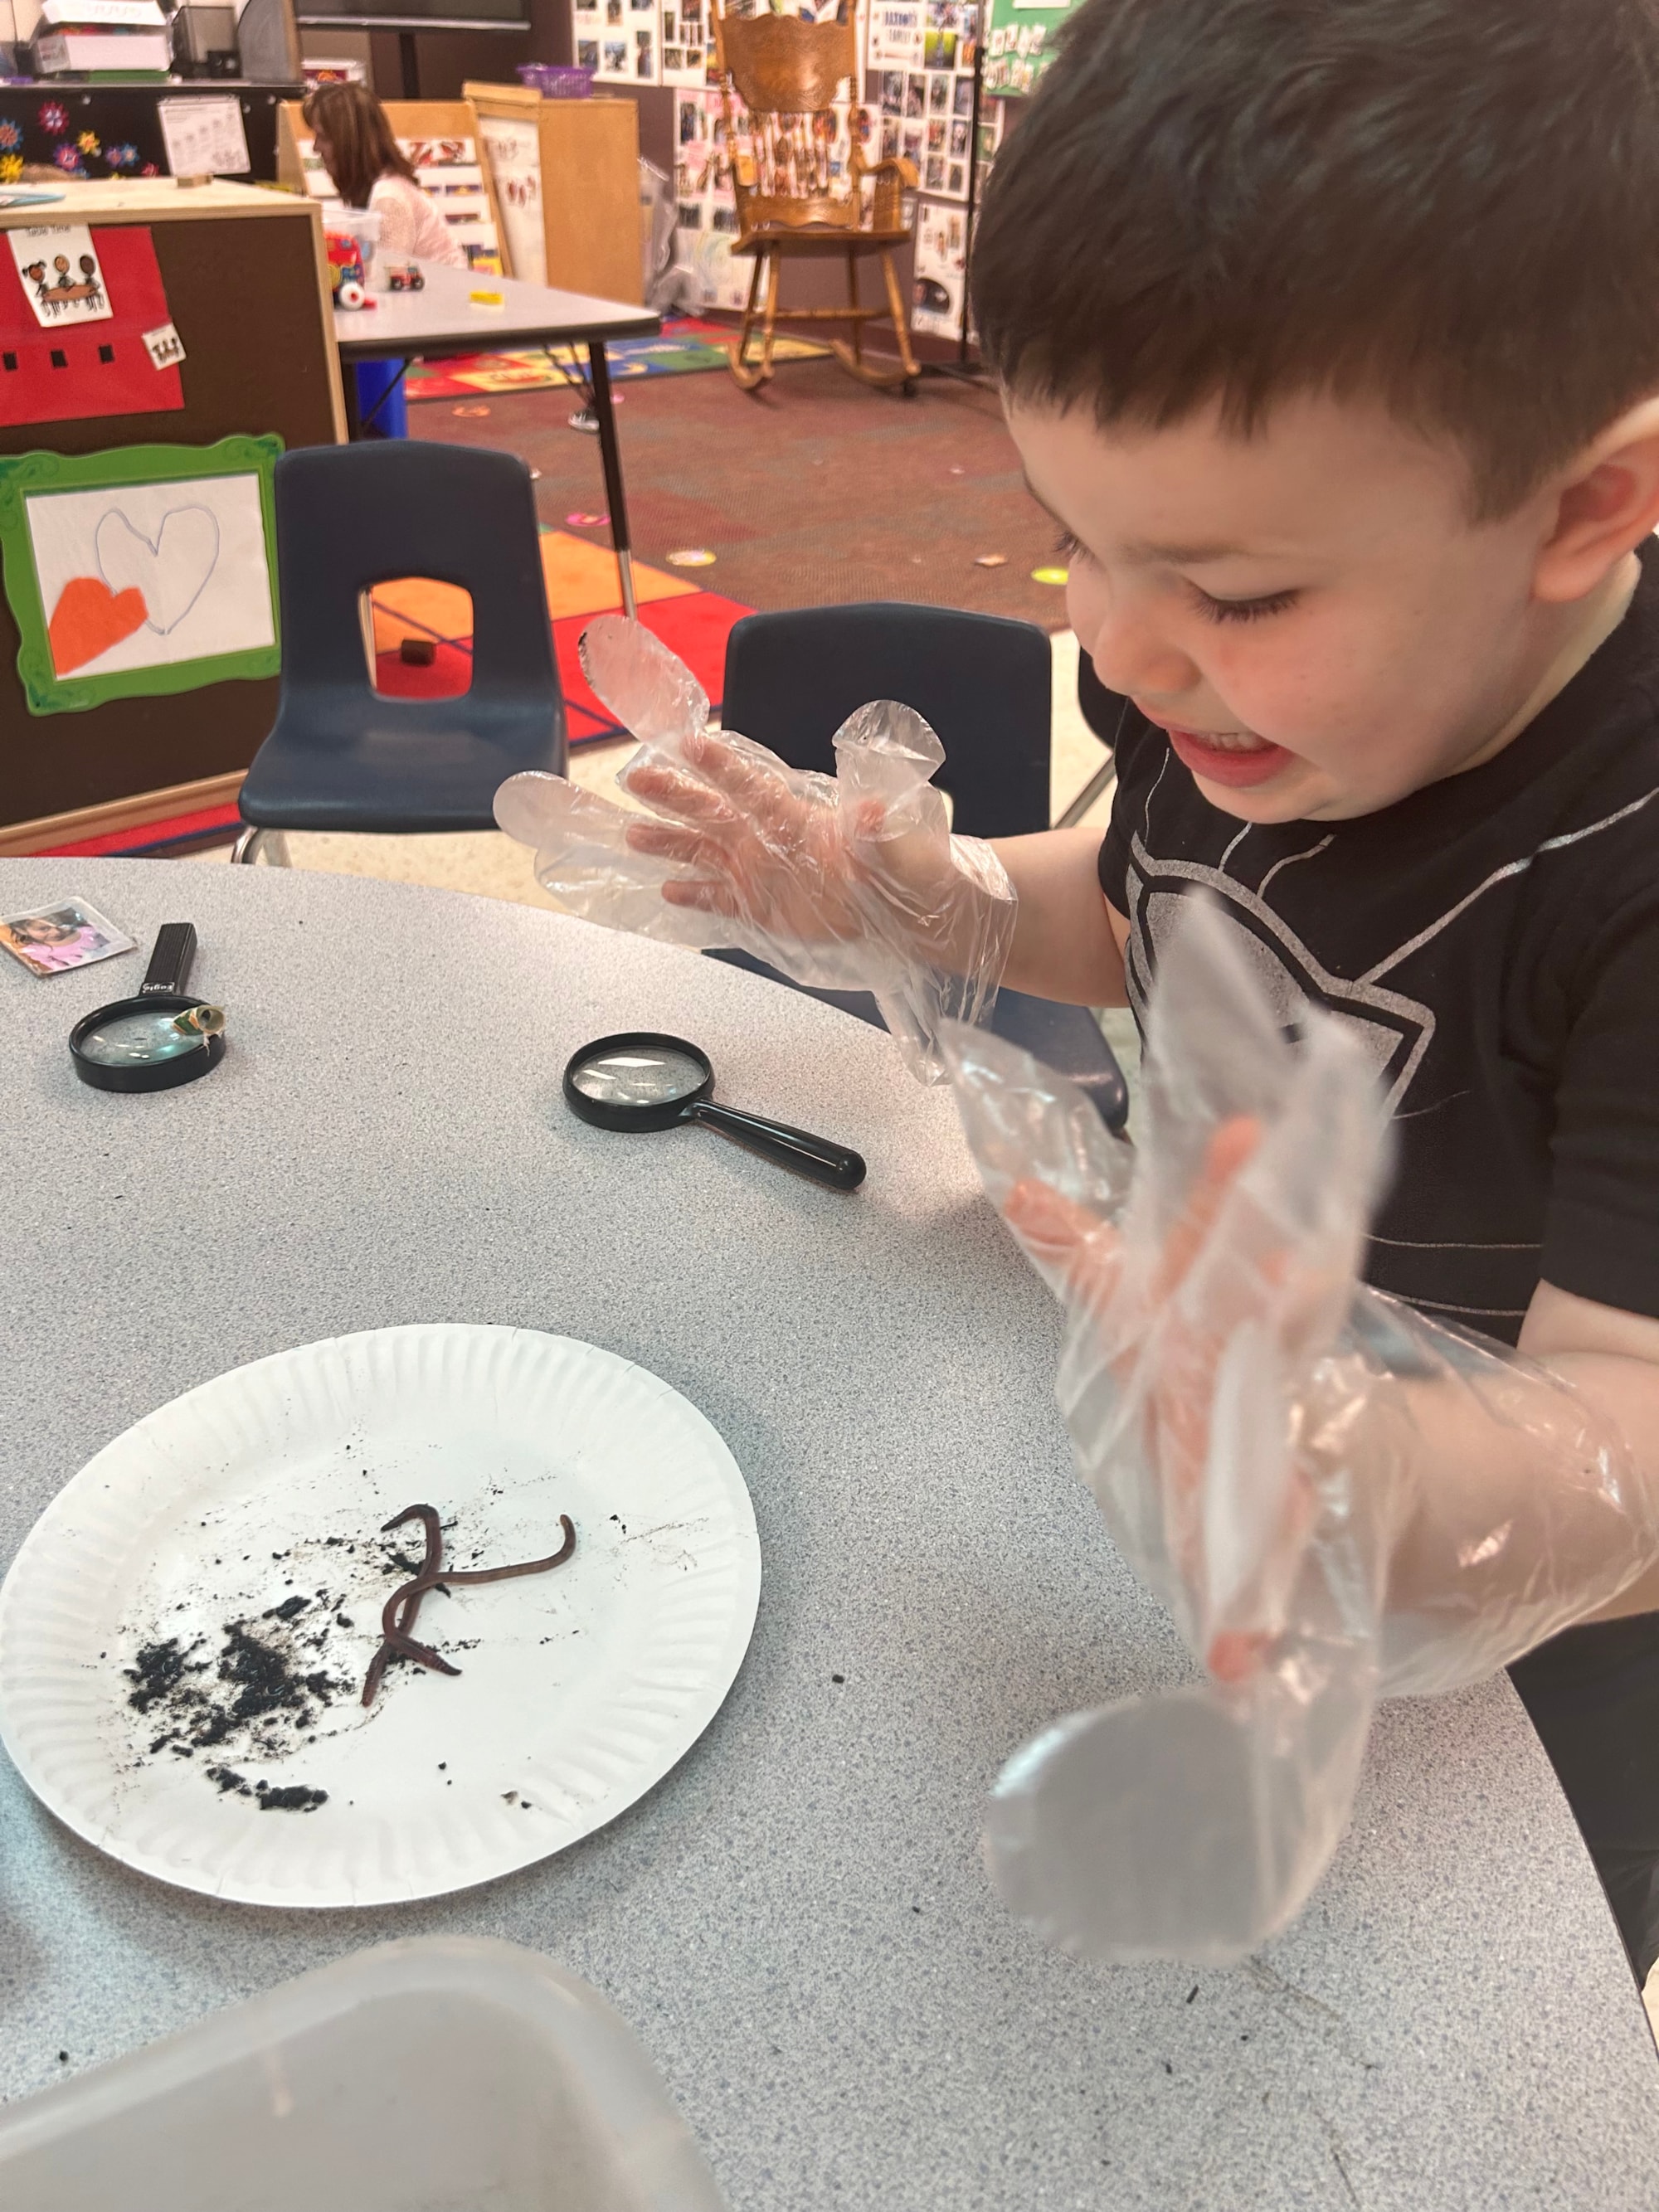 Student examines earthworms